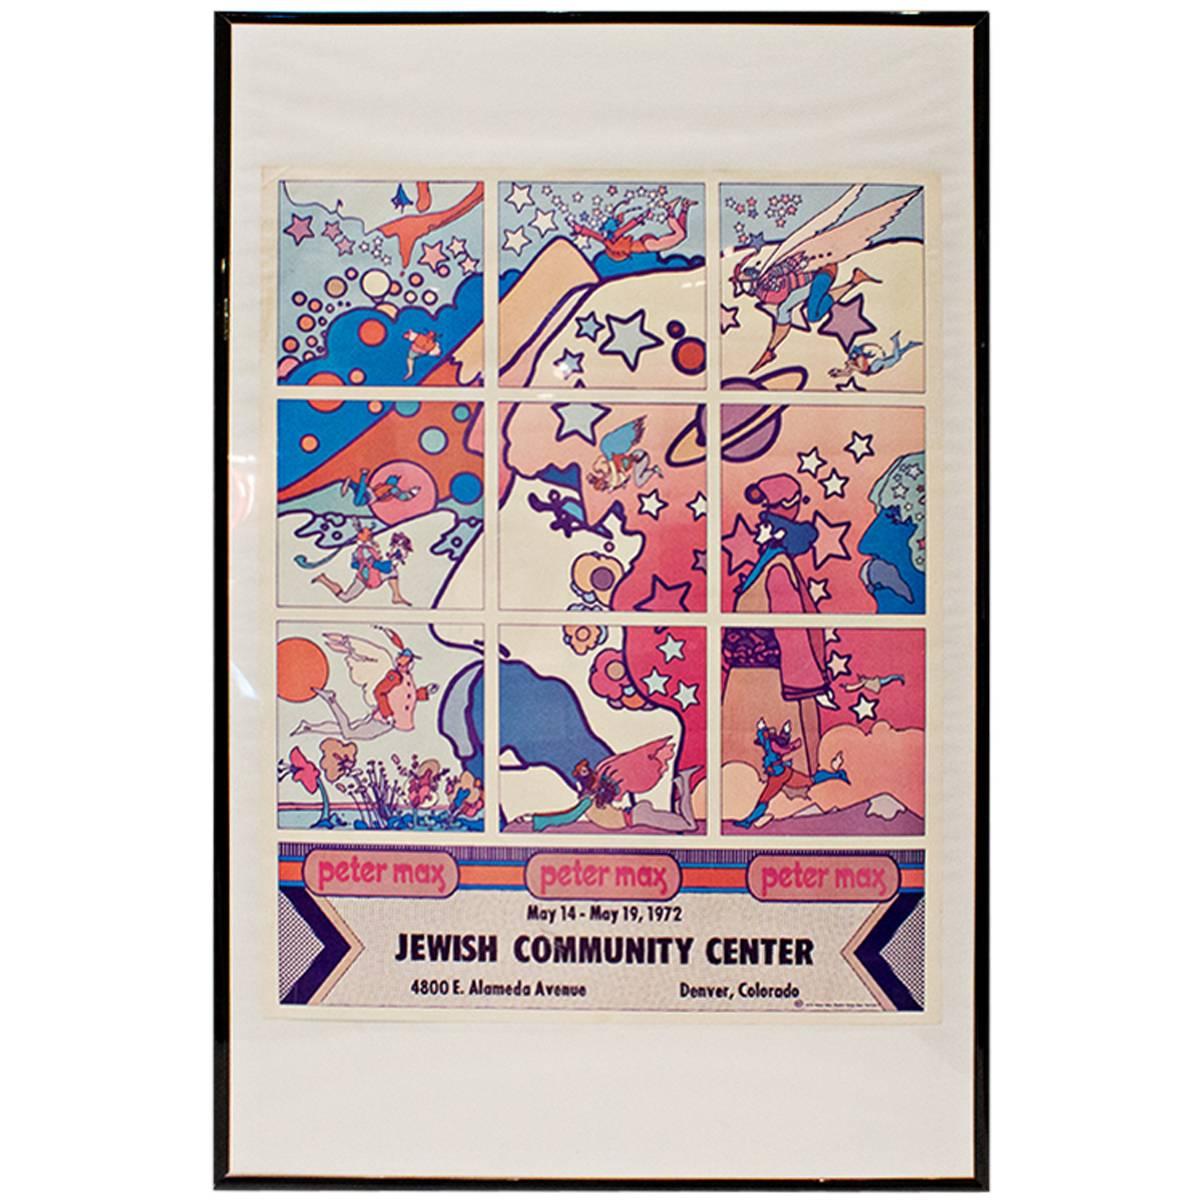 Peter Max "Jewish Community Center" Exhibition Poster, 1970